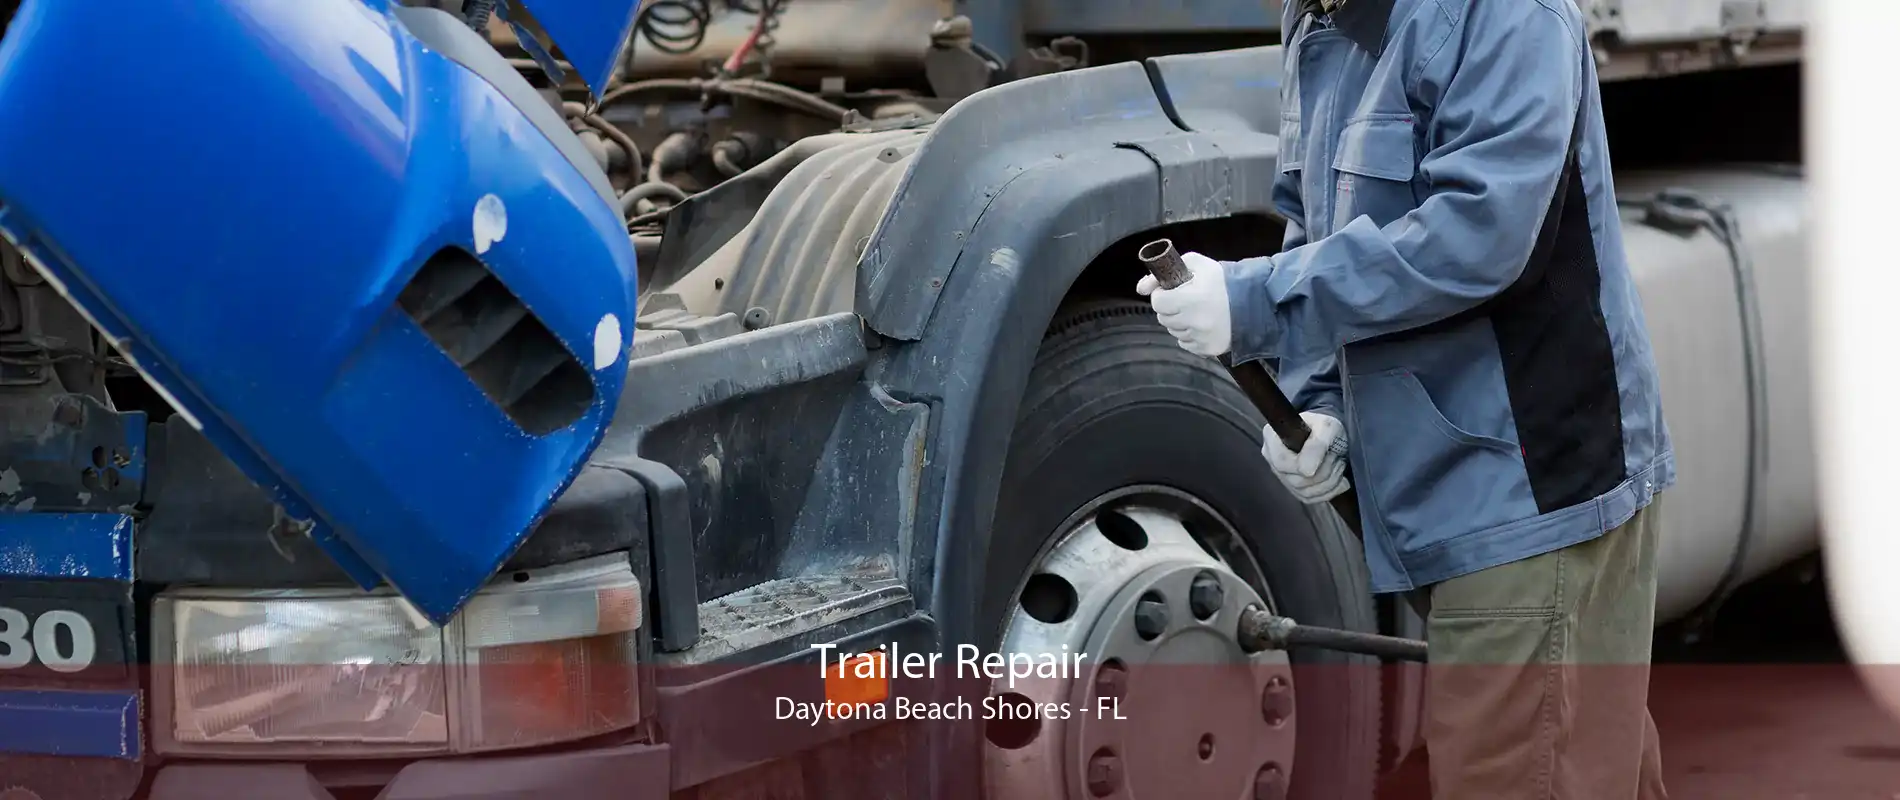 Trailer Repair Daytona Beach Shores - FL